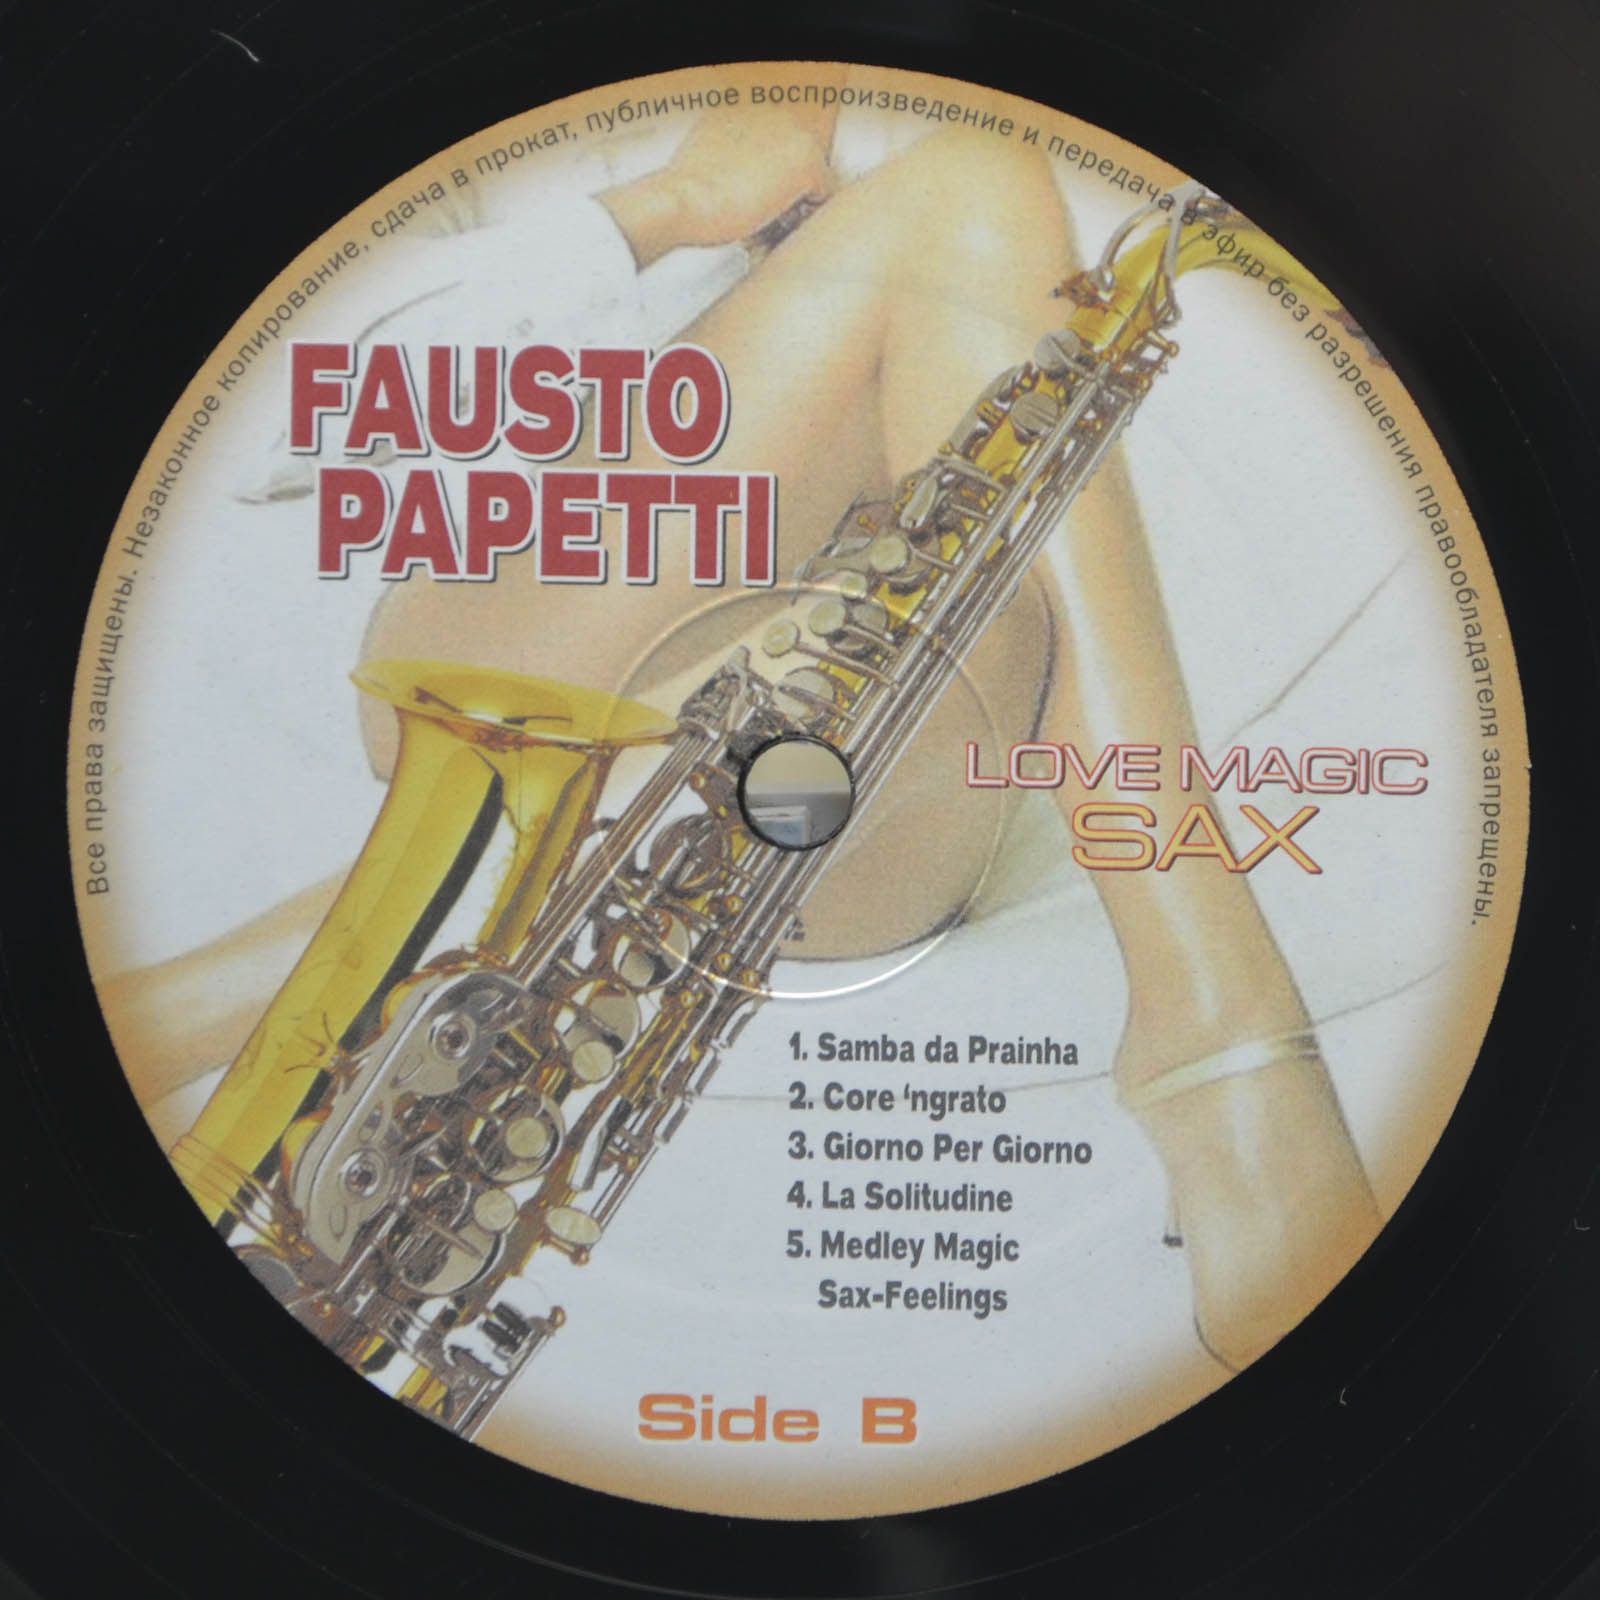 Fausto Papetti — Love Magic Sax, 2018